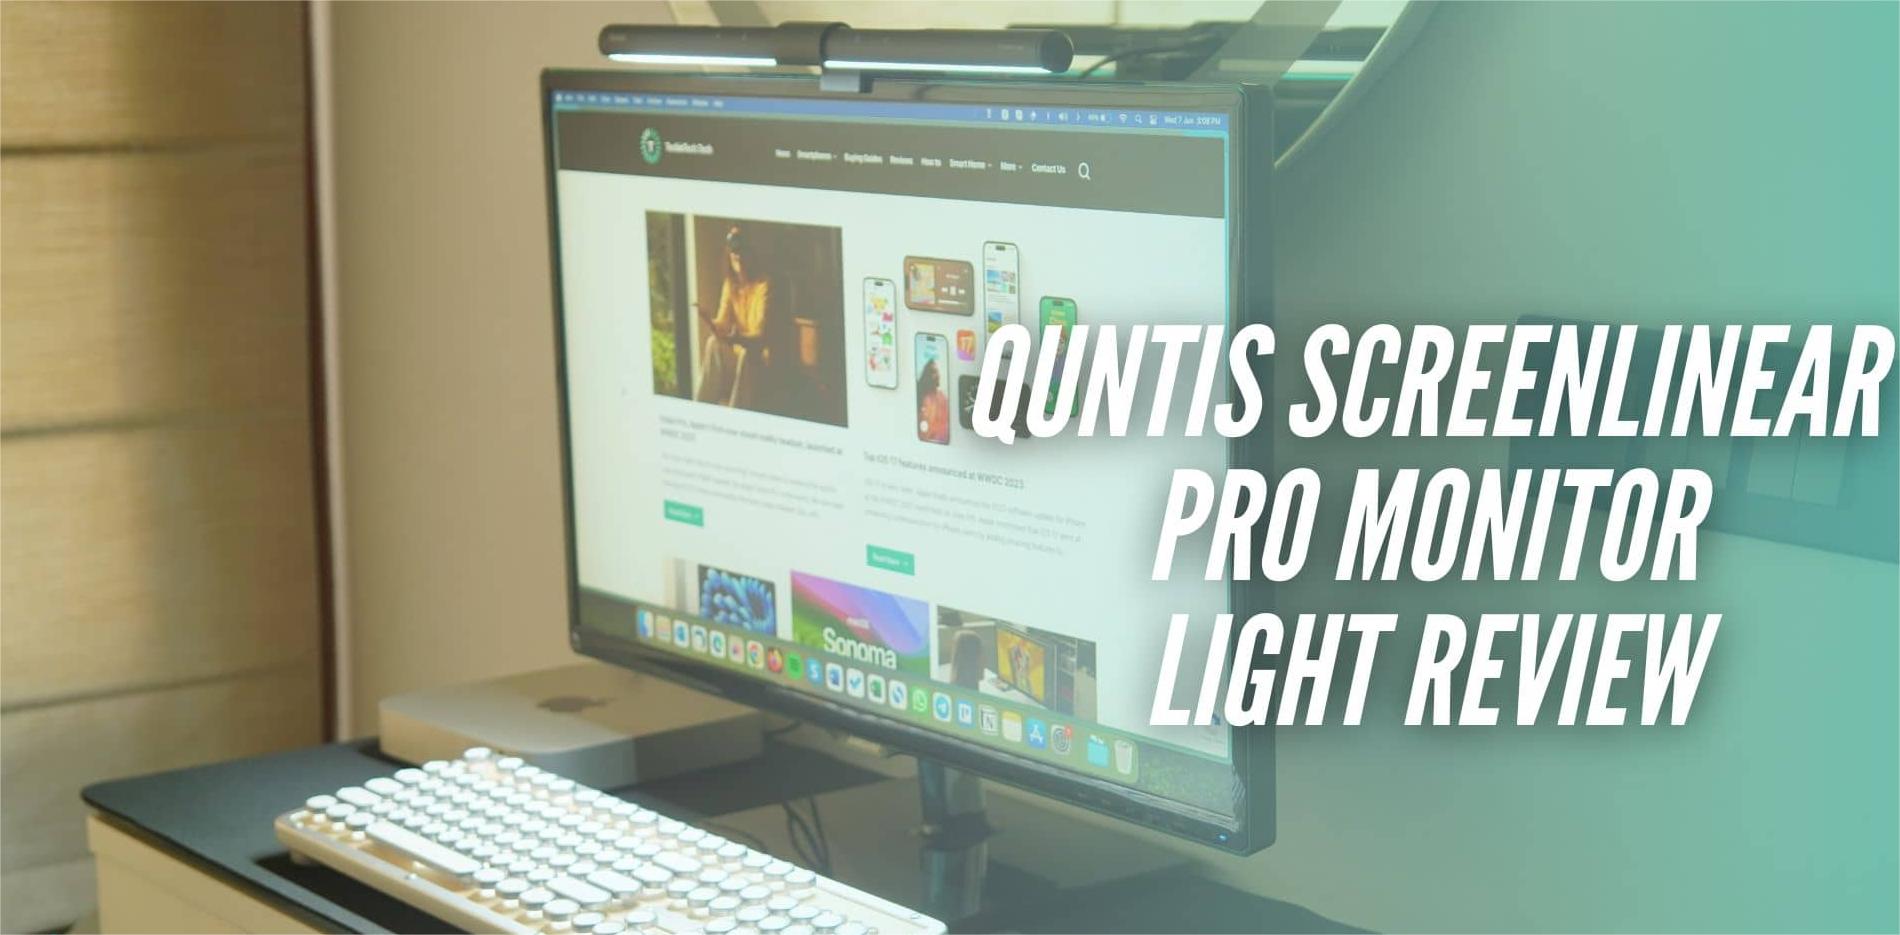 Quntis ScreenLinear Pro Monitor Light Review